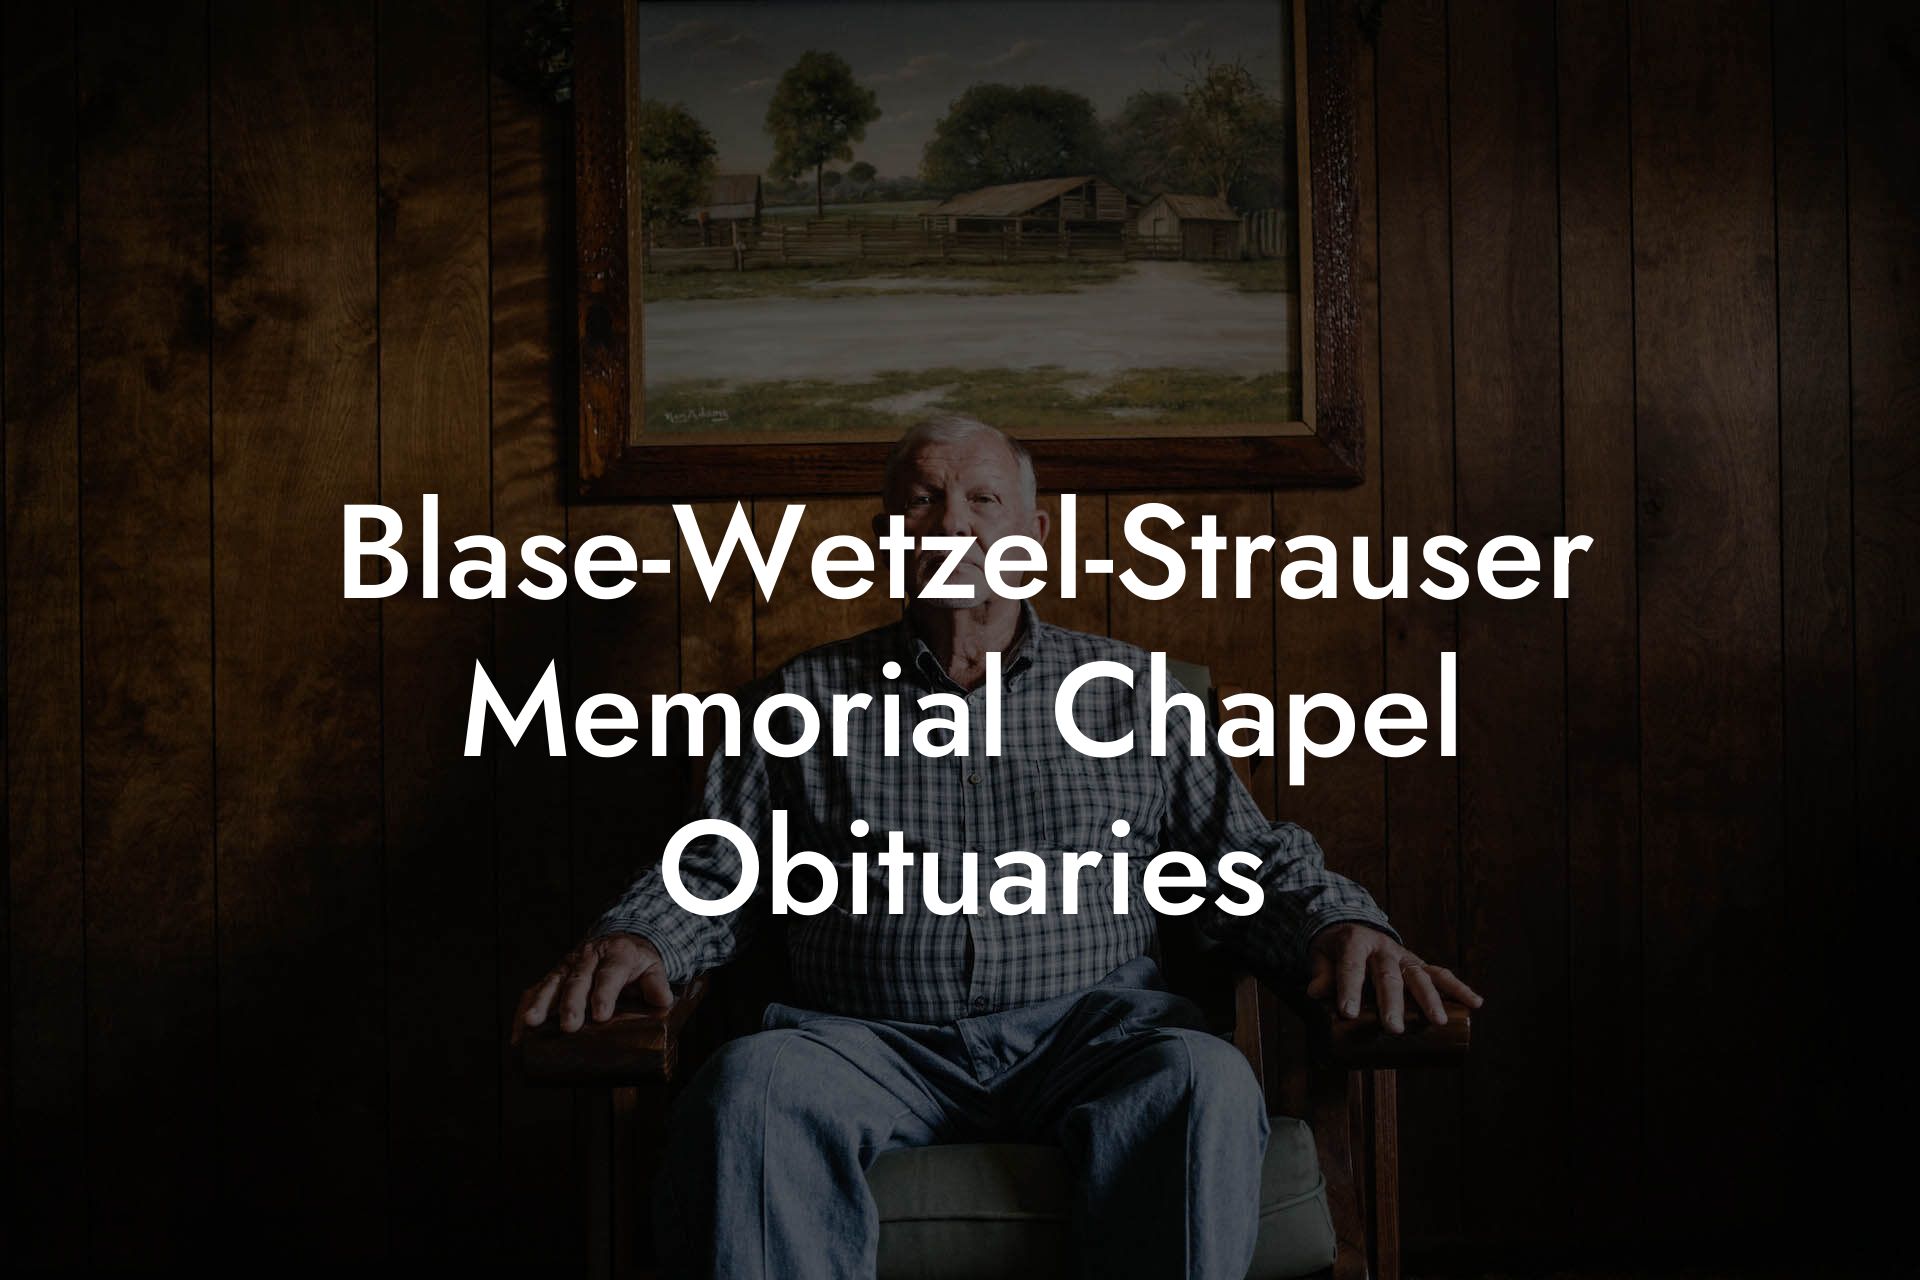 Blase-Wetzel-Strauser Memorial Chapel Obituaries